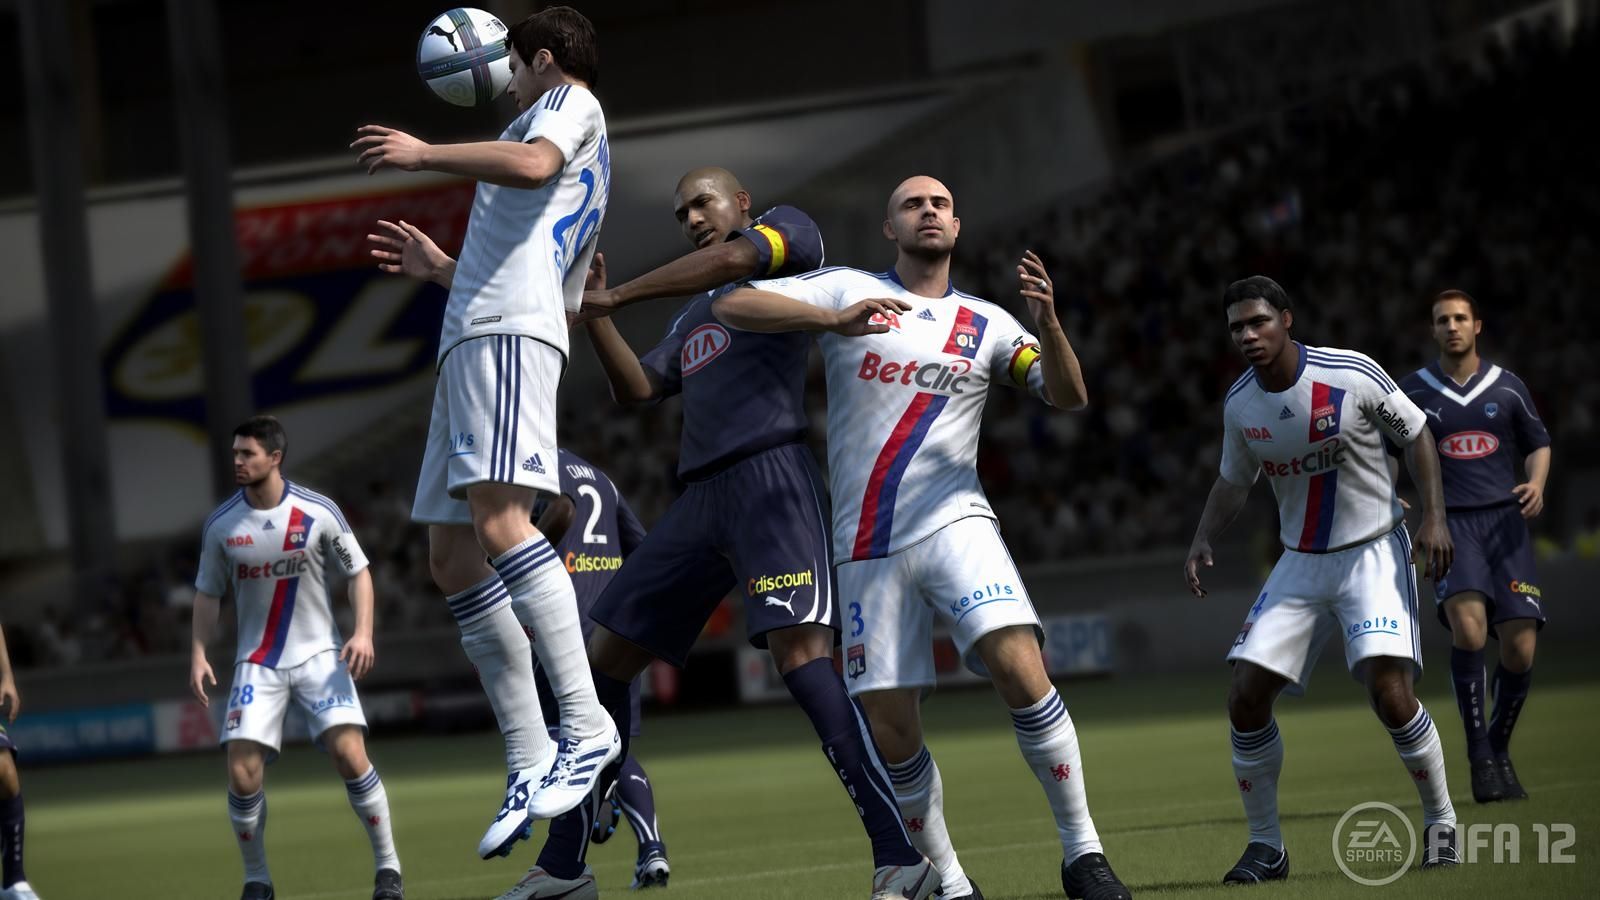 FIFA 12 - Image 2